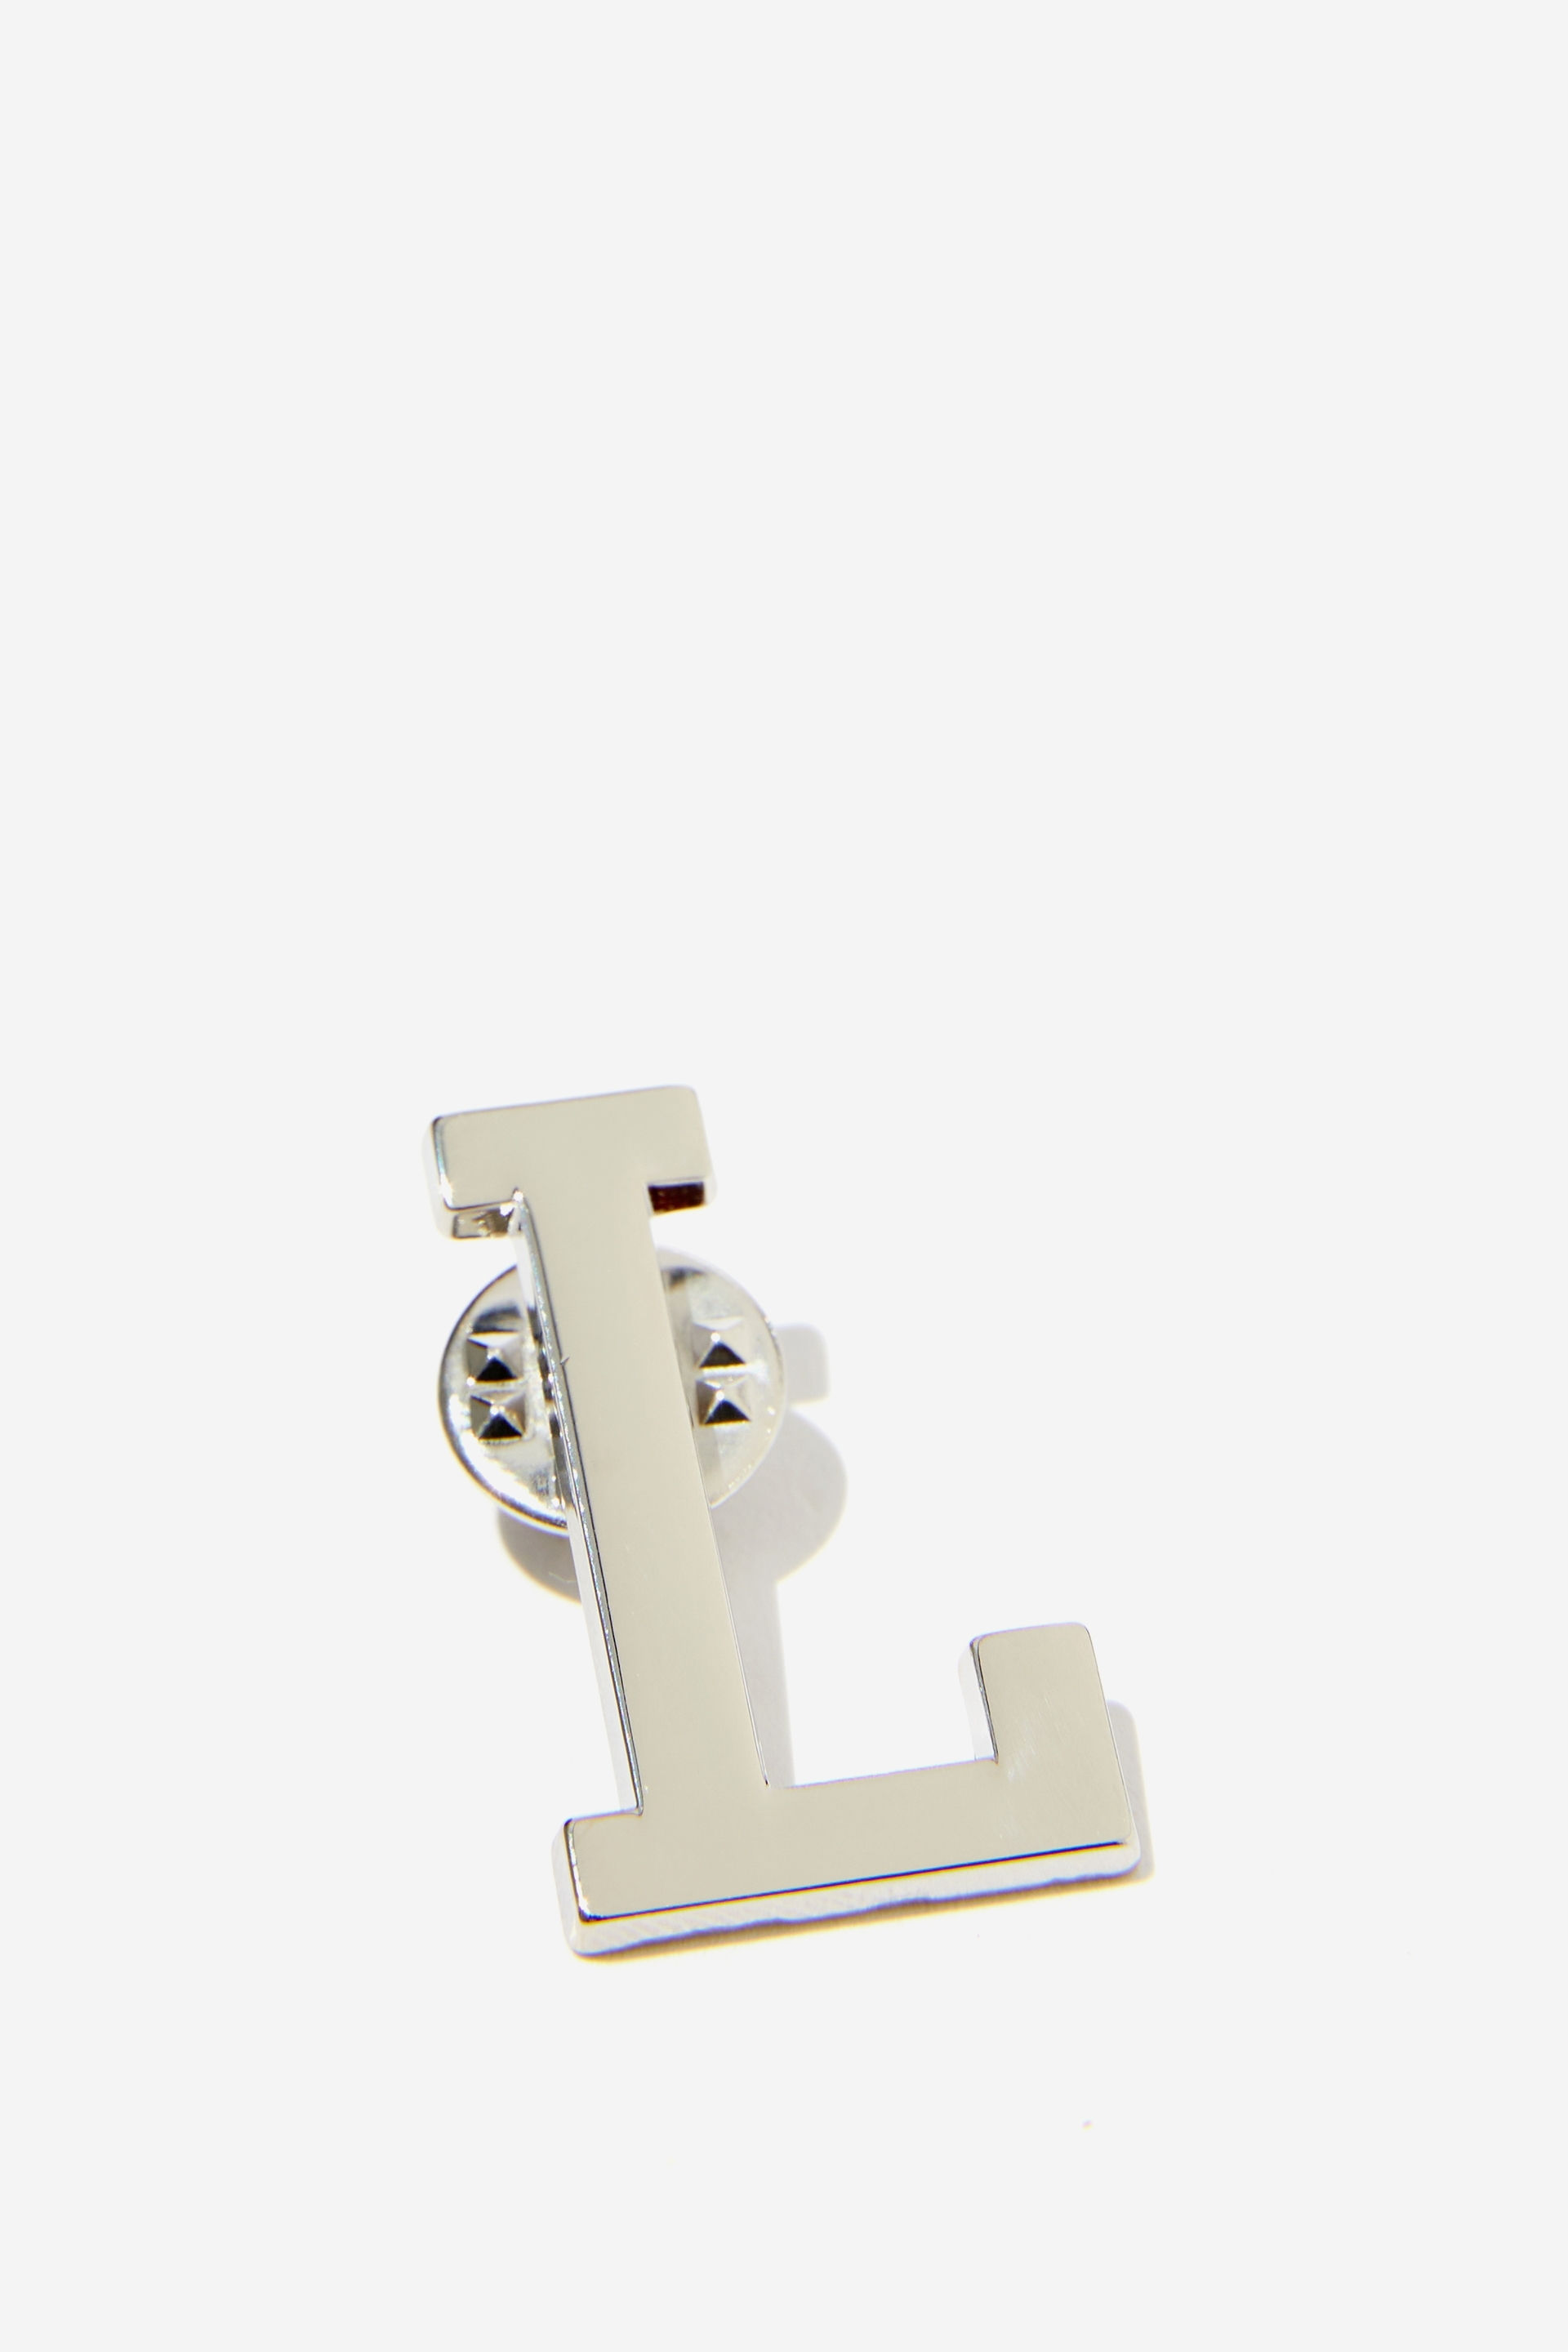 Typo - Alpha Pin - L silver